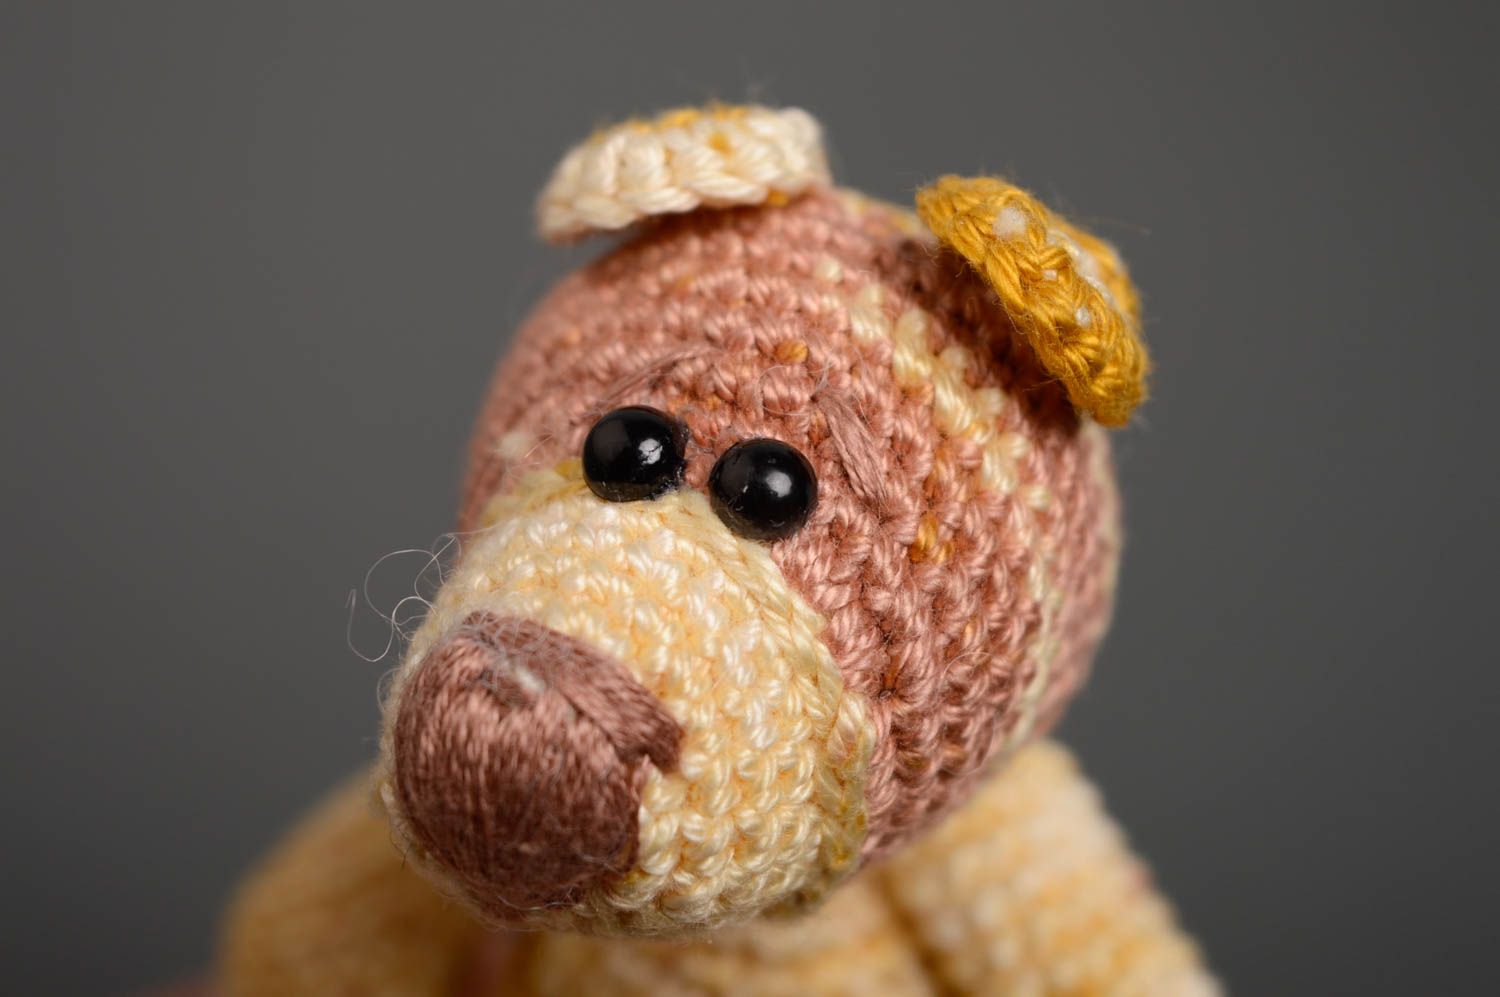 Small crochet toy photo 2